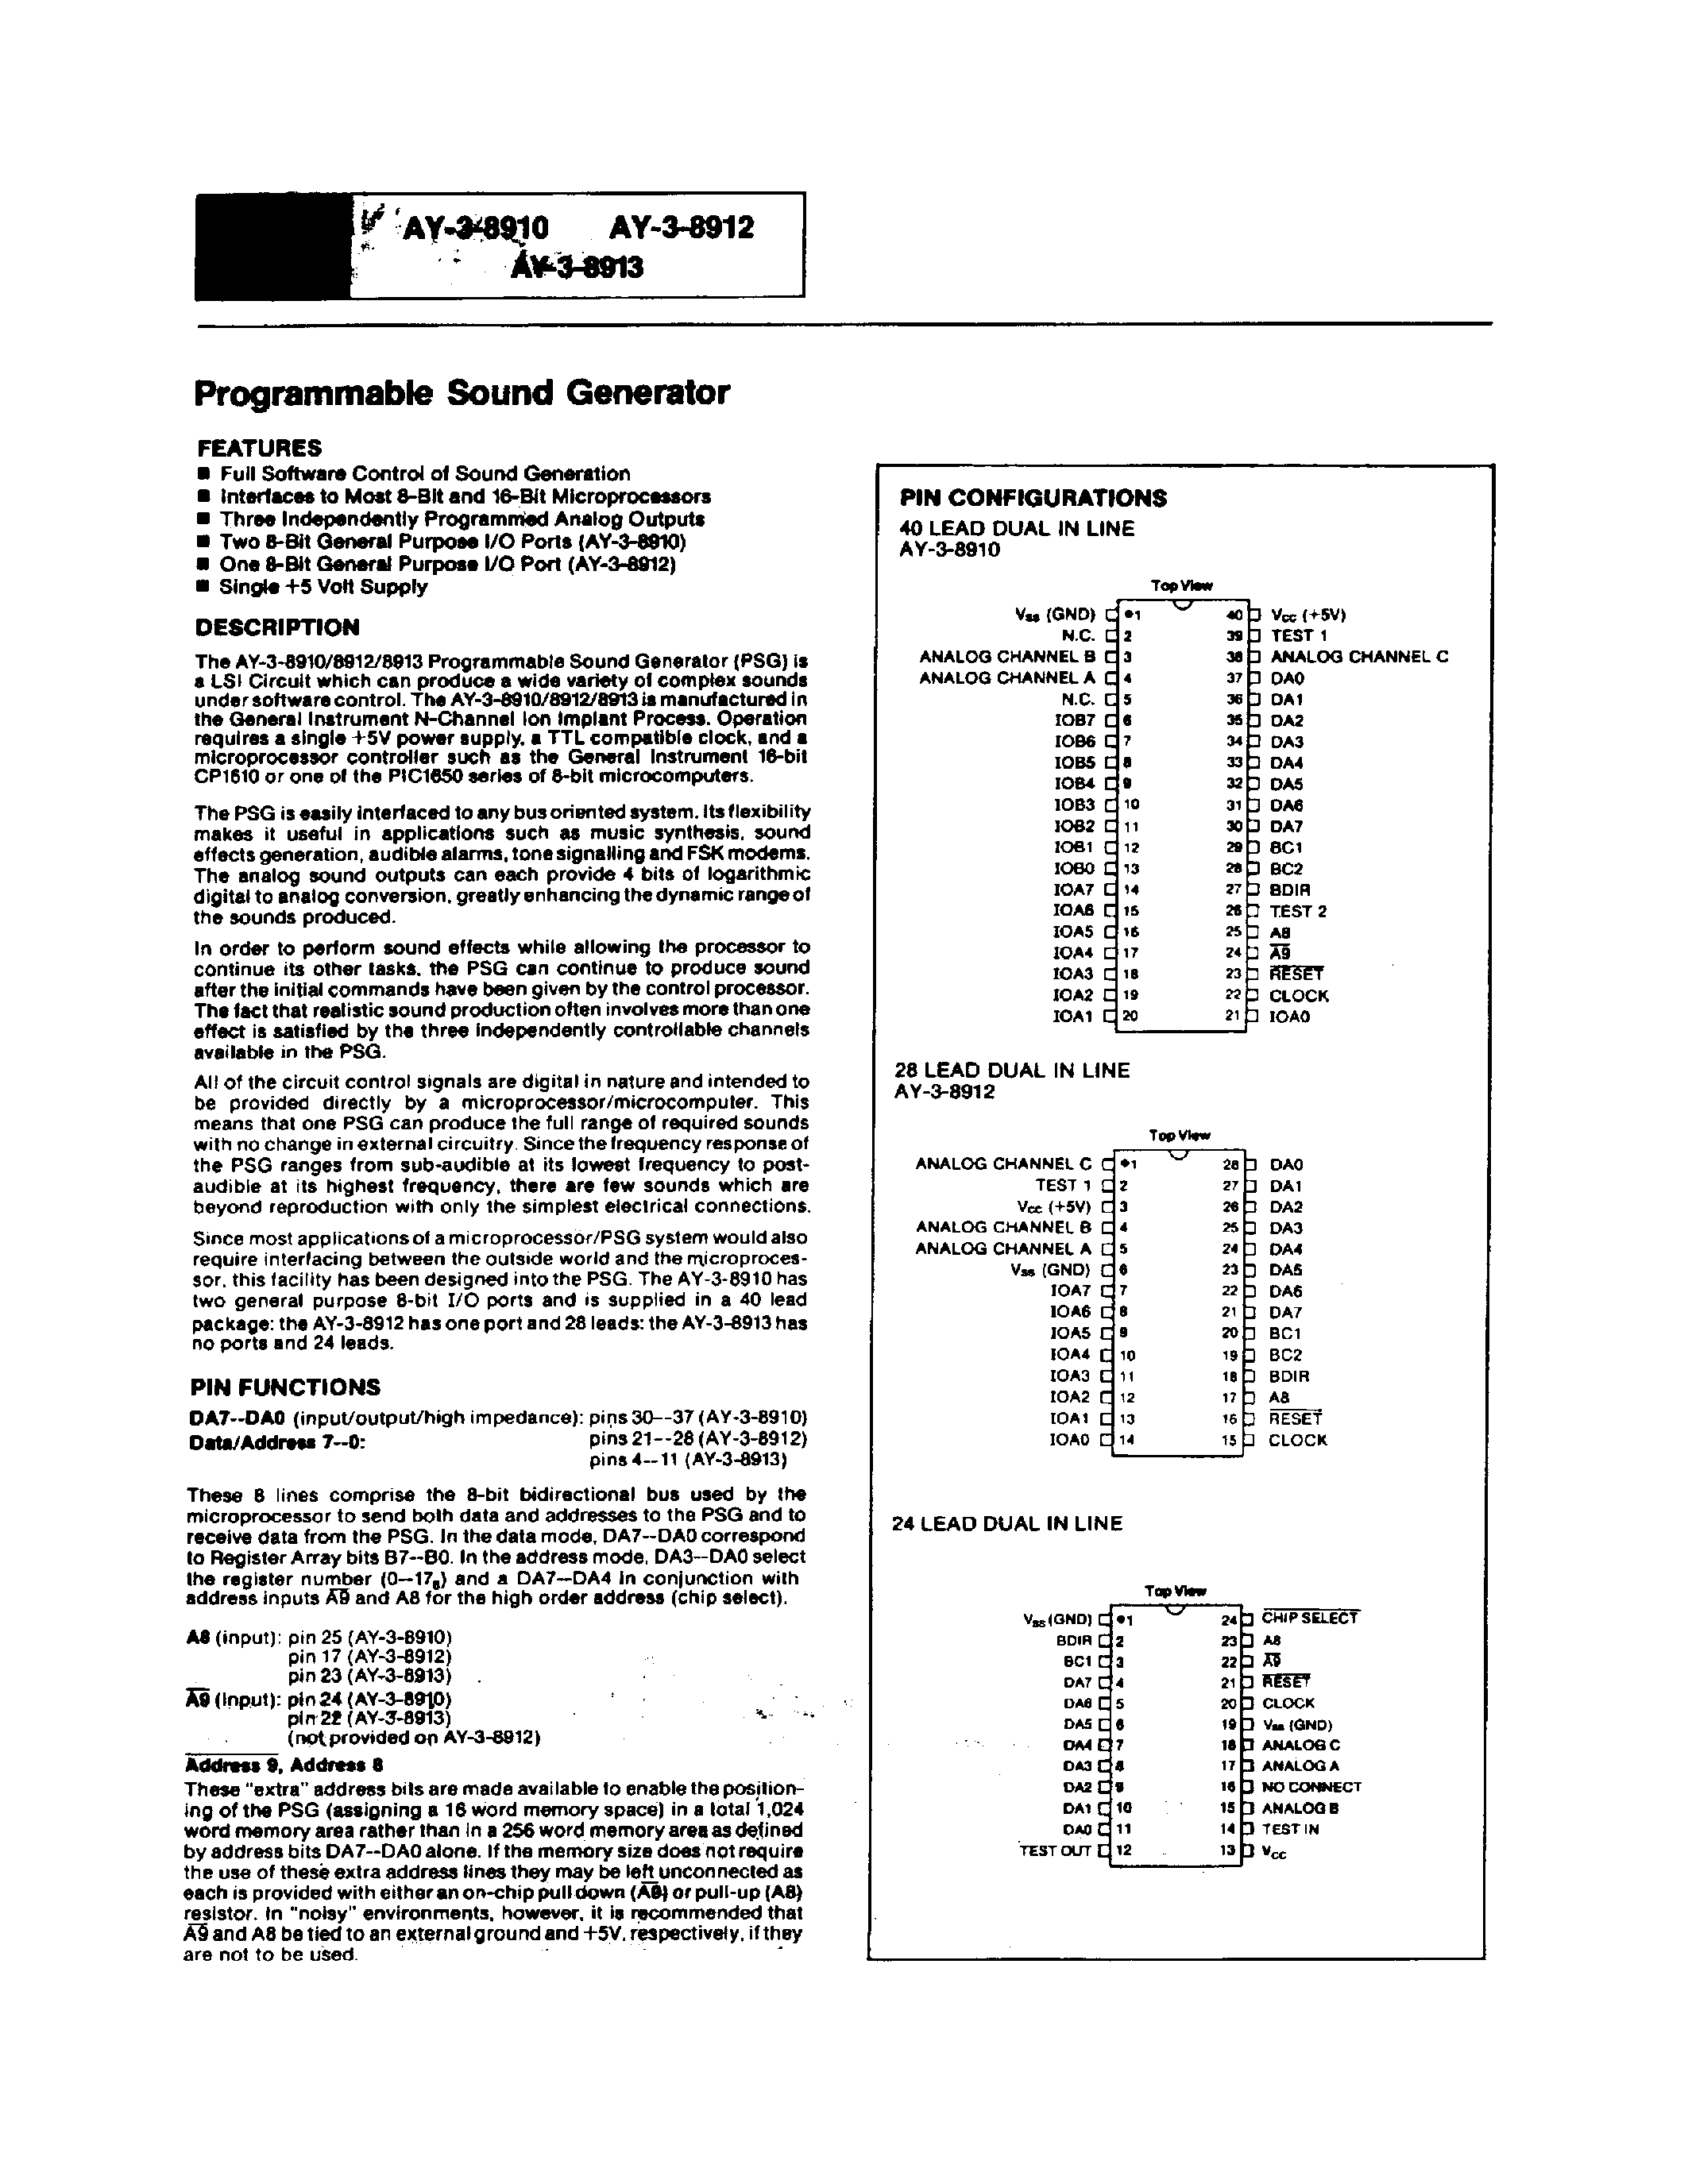 Datasheet AY3-8910 - PROGRAMMABLE SOUND GENERATOR page 1